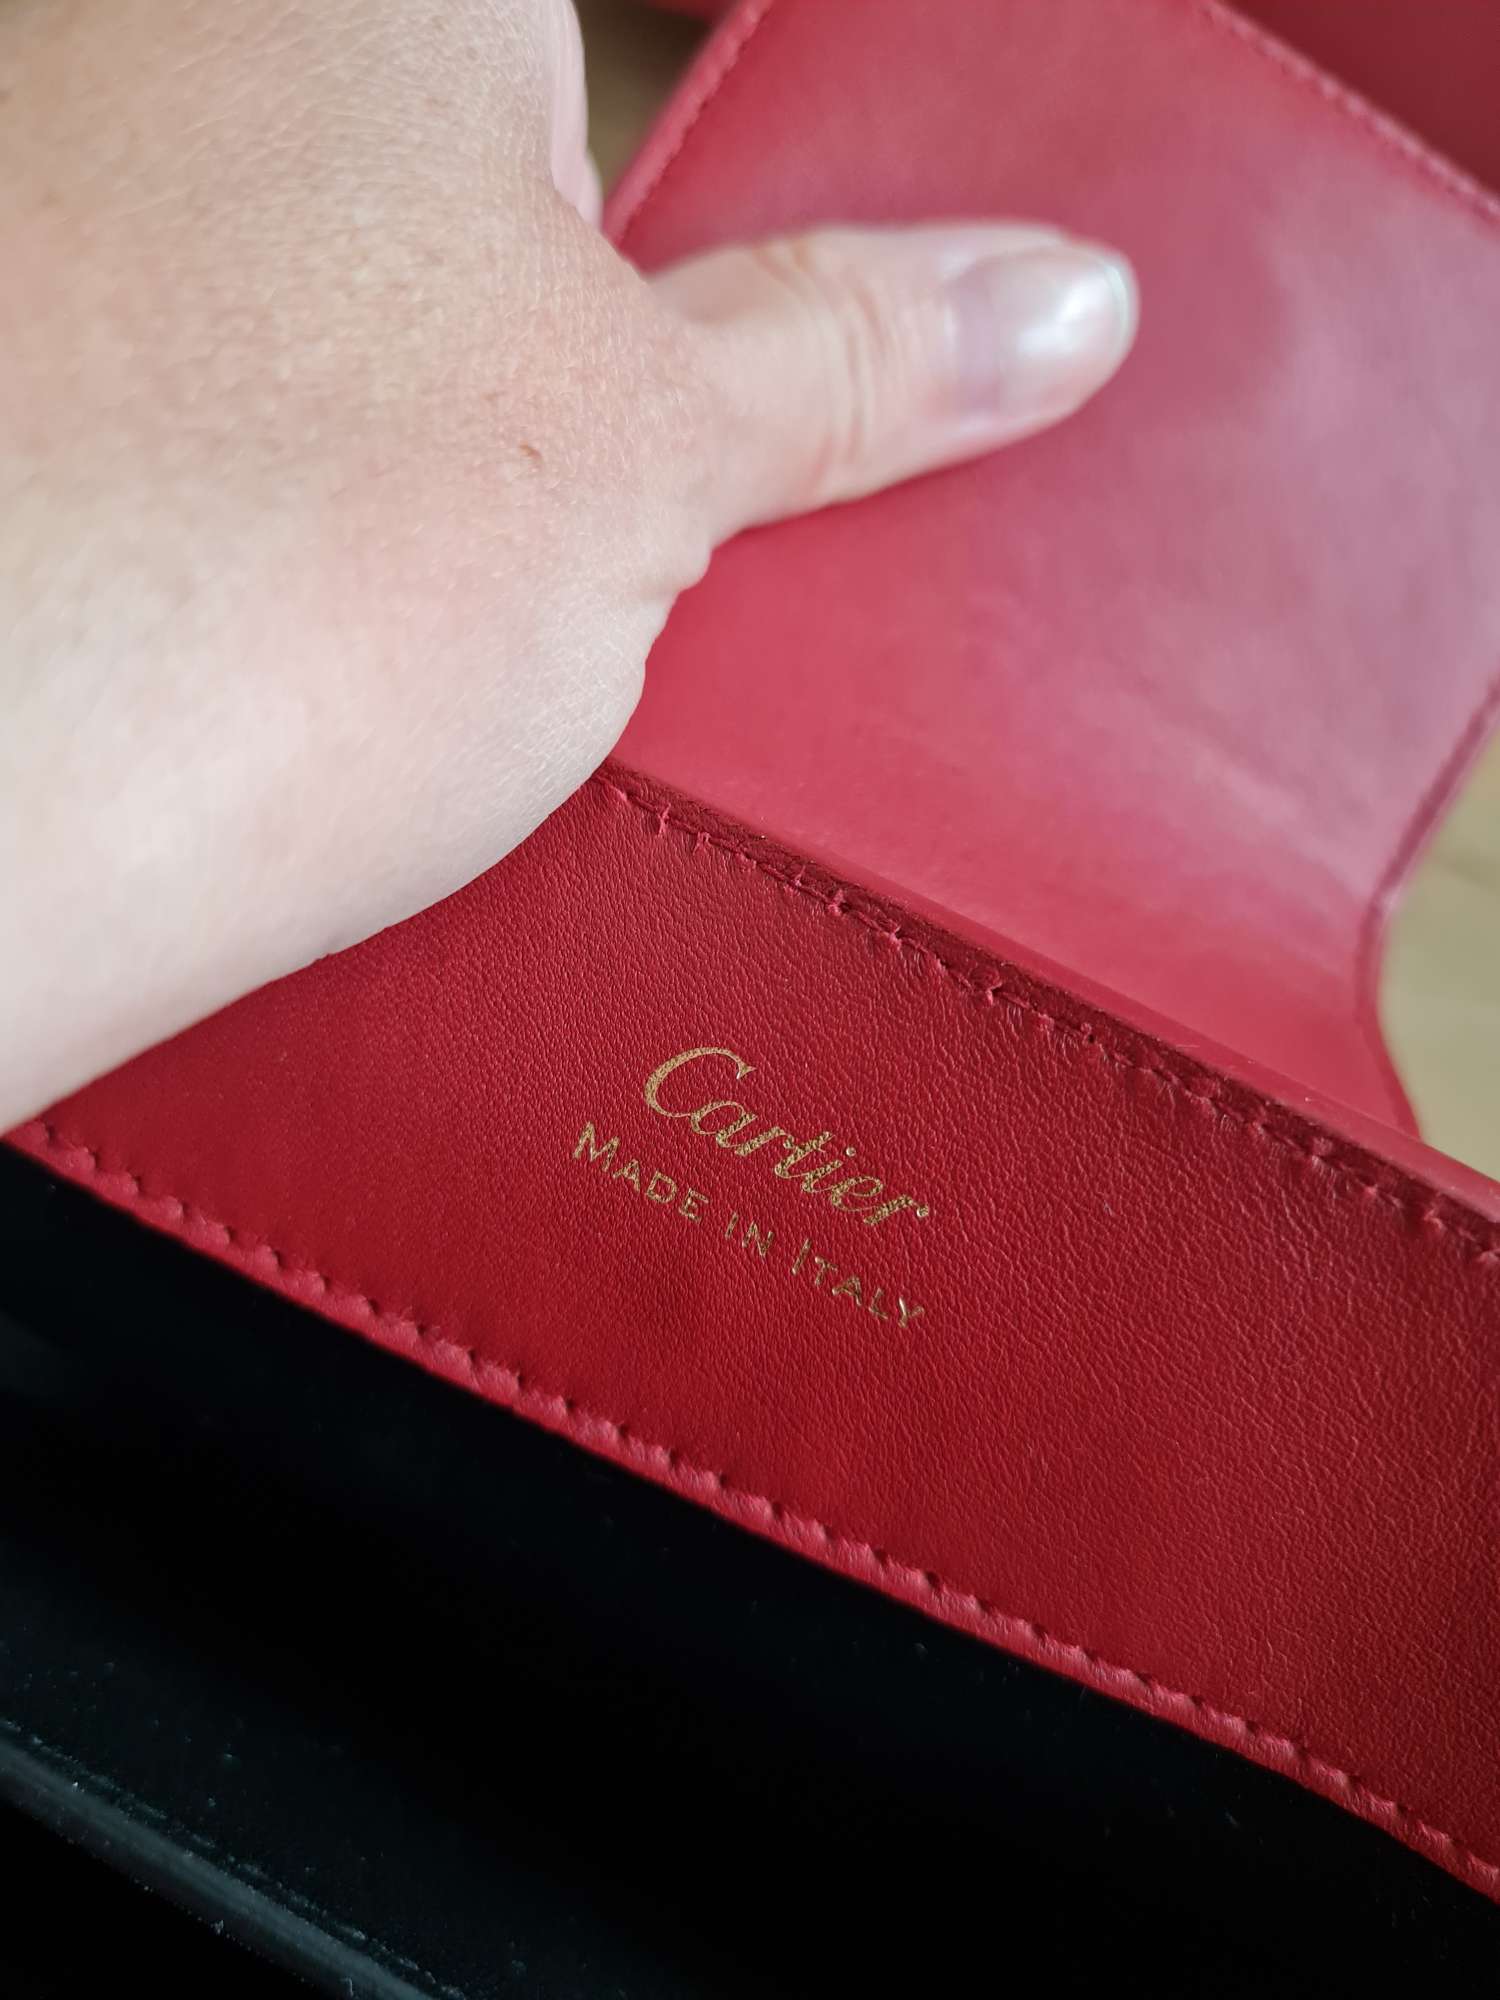 Cartier ,,Mini Guirlande,, celokožená kabelka